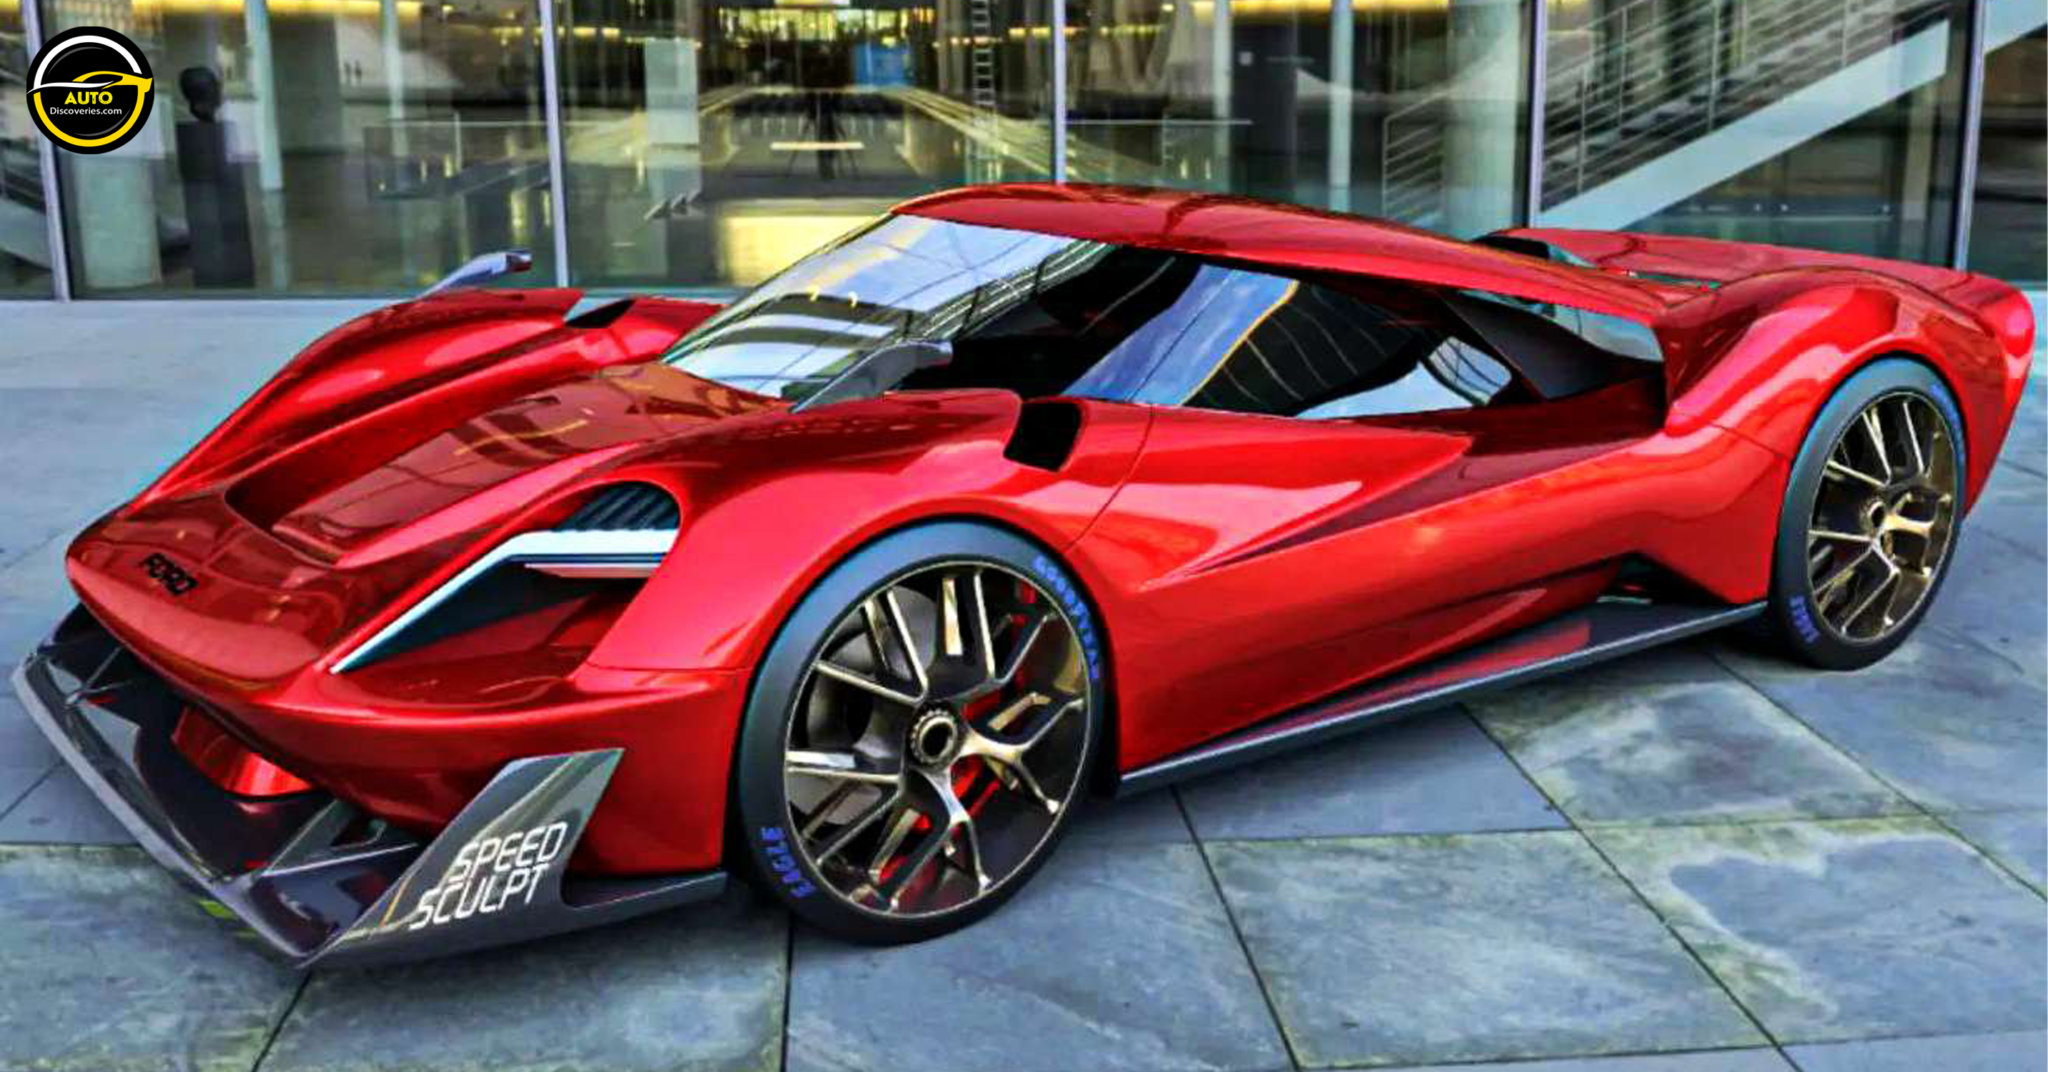 2025-ford-gt-model-designed-by-marco-wietrzychowski-auto-discoveries